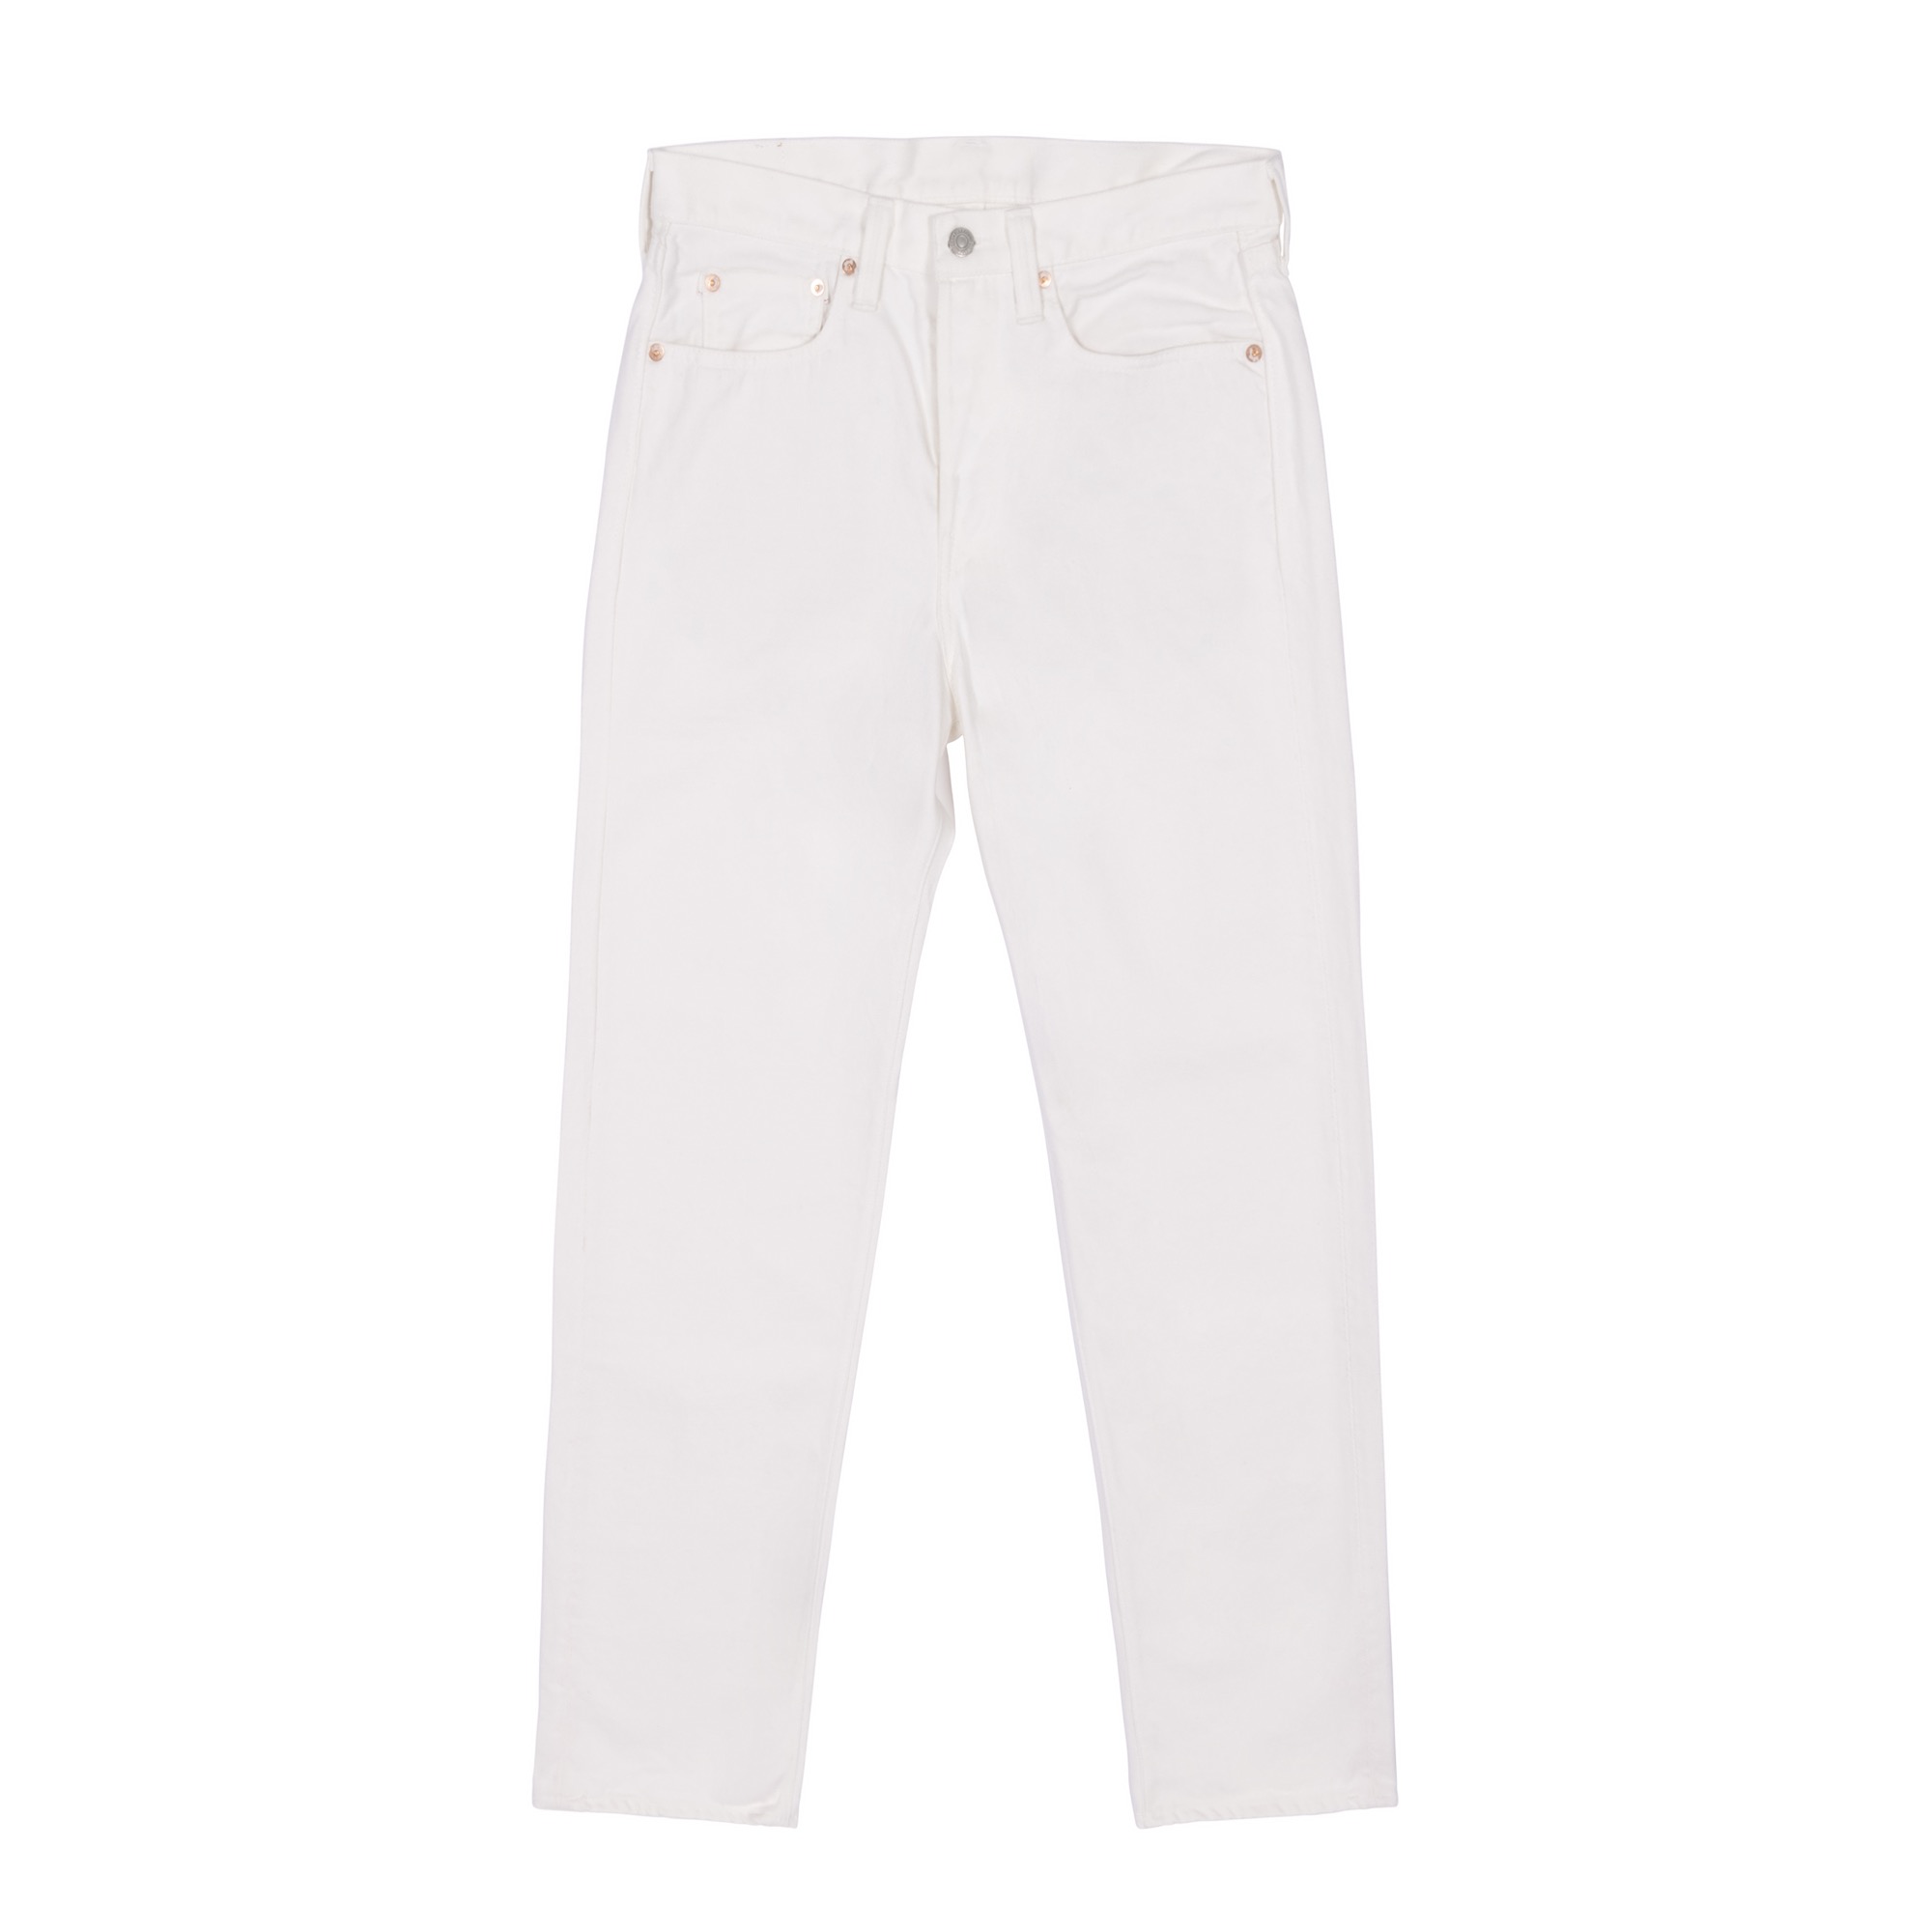 Fullcount x Timothy Everest White Jeans 1